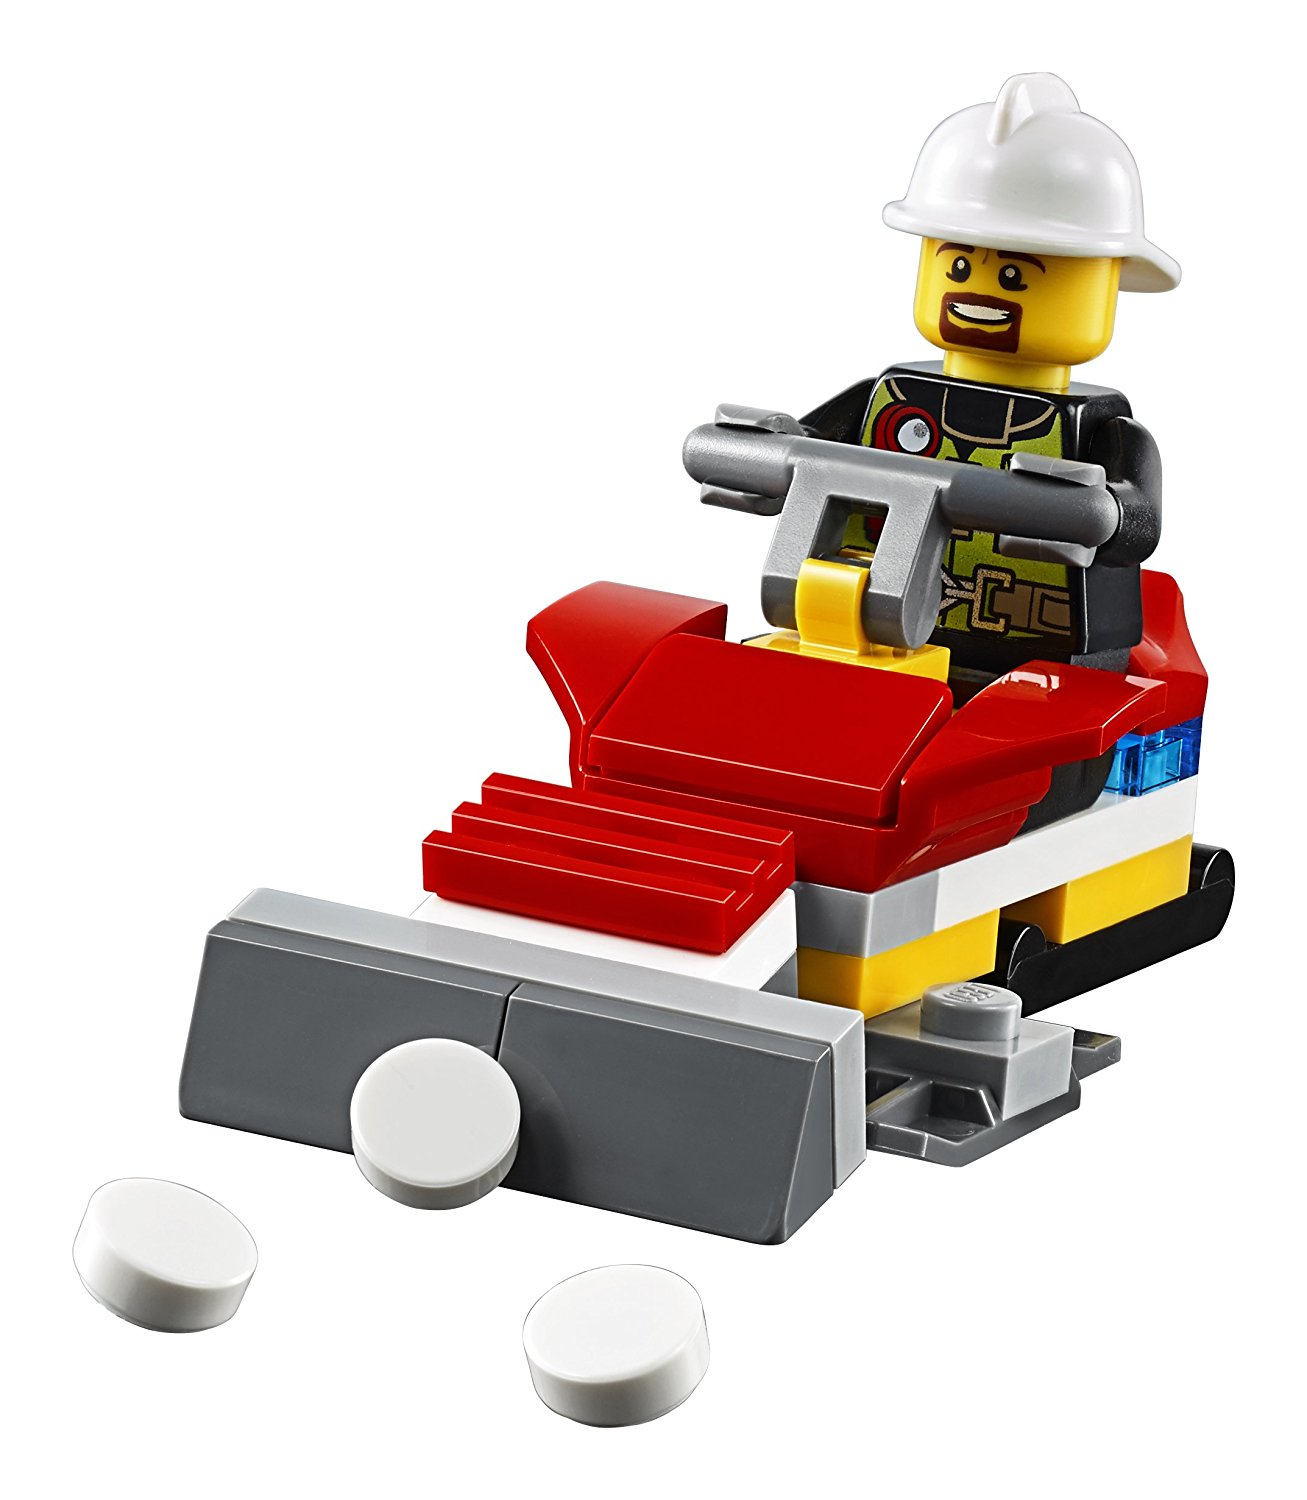 LEGO City Town 60133 Advent Calendar Building Kit